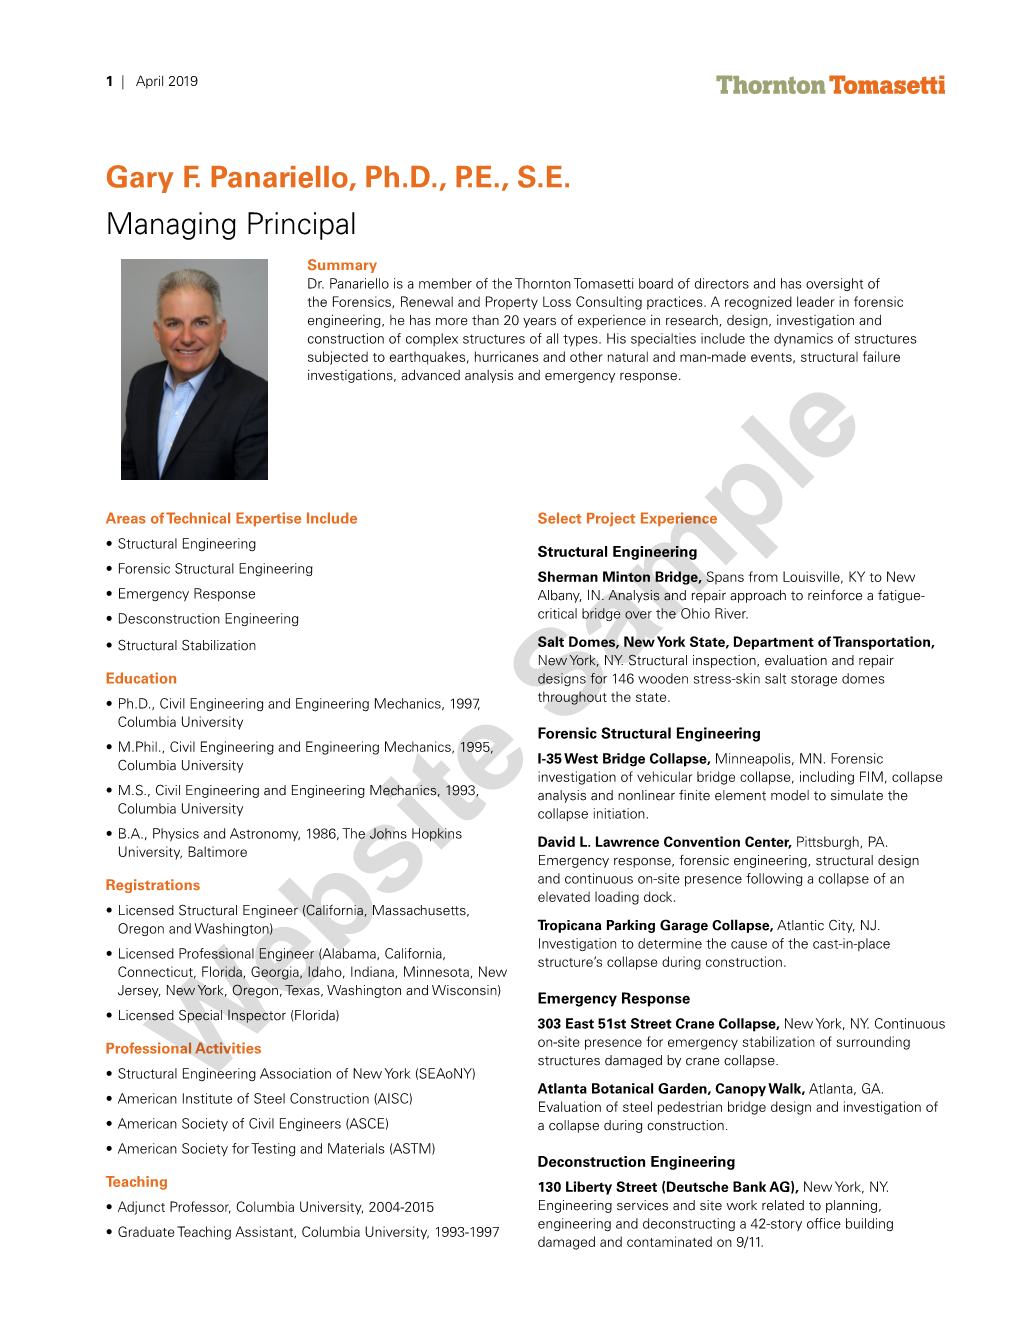 Gary F. Panariello, Ph.D., P.E., S.E. Managing Principal